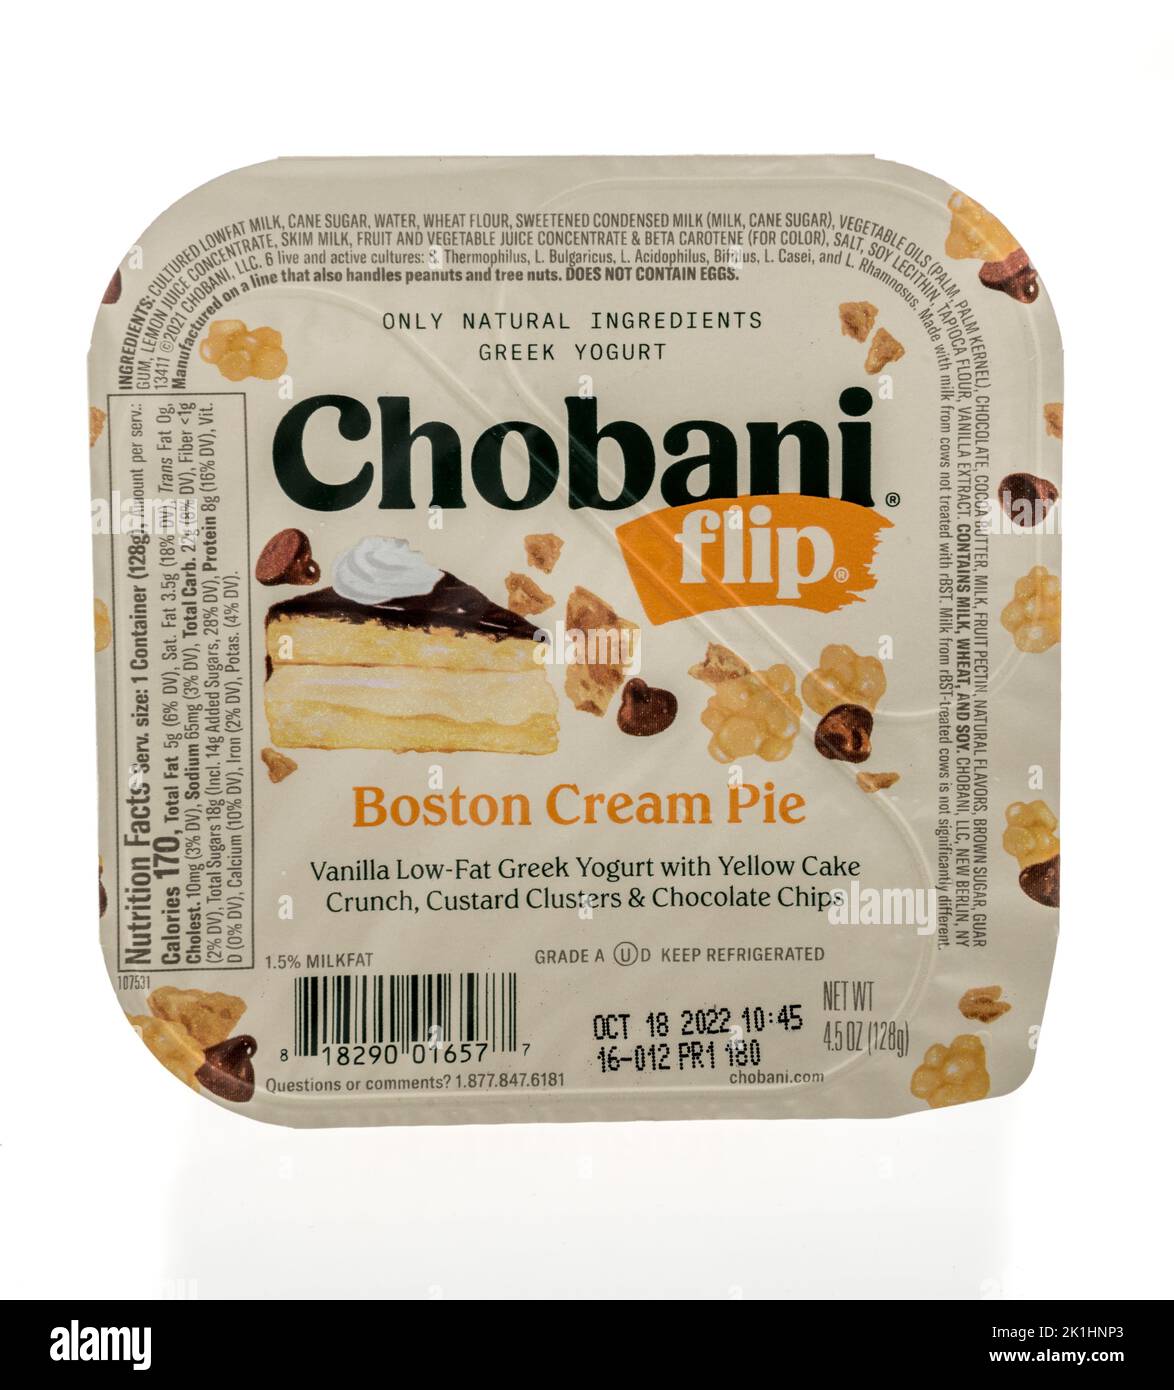 Winneconne, WI - 18 September 2022: A package of Chobani flip Boston cream pie greek yogurt on an isolated background. Stock Photo